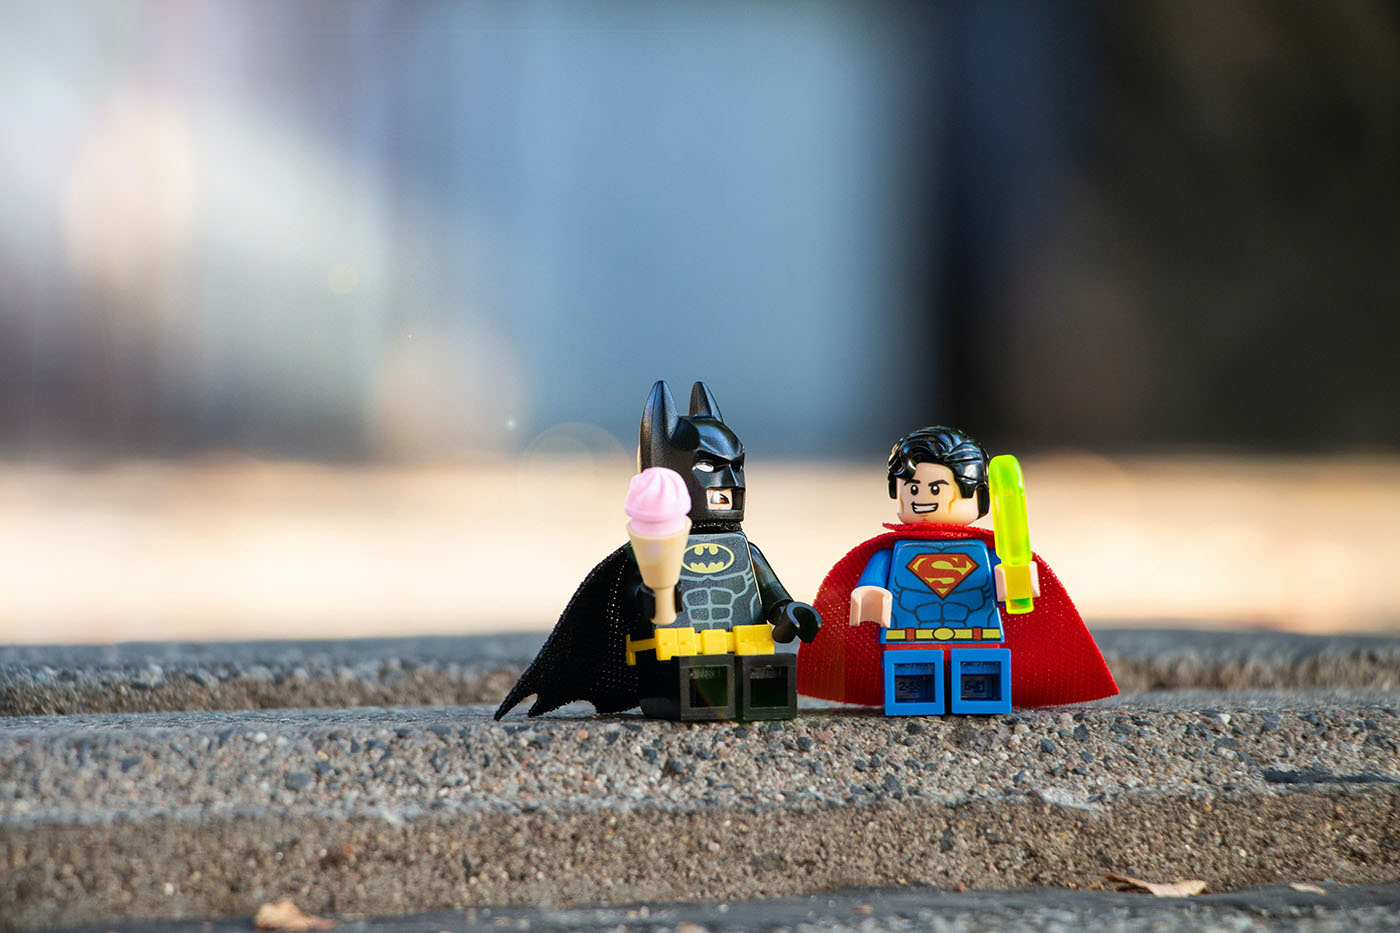 ©Yulia Matvienko/Unsplash, Batman and superman hanging out, illustrating frienship